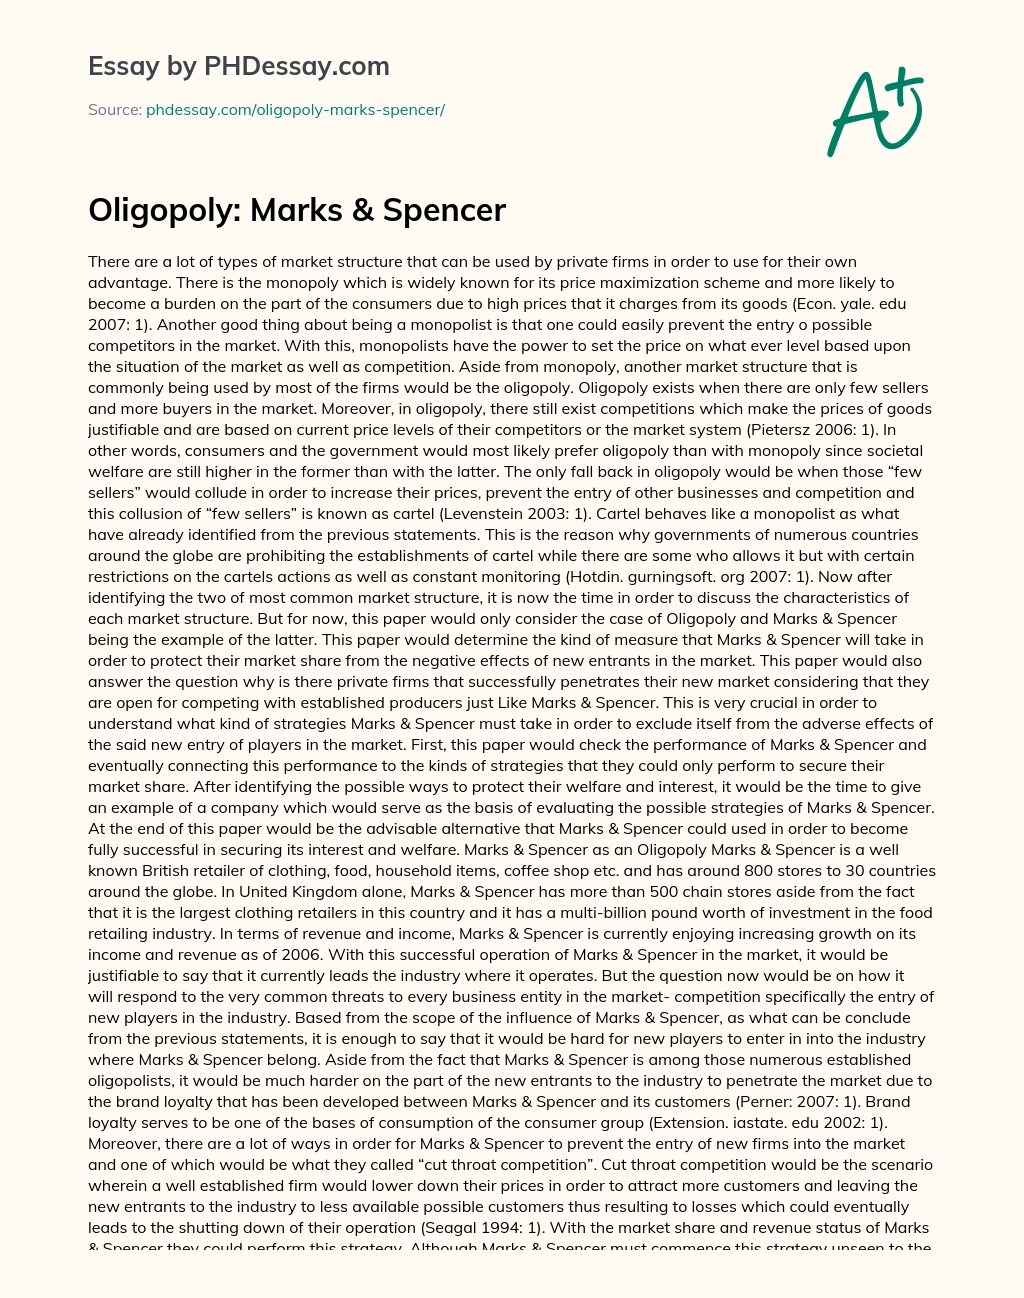 Oligopoly: Marks & Spencer essay